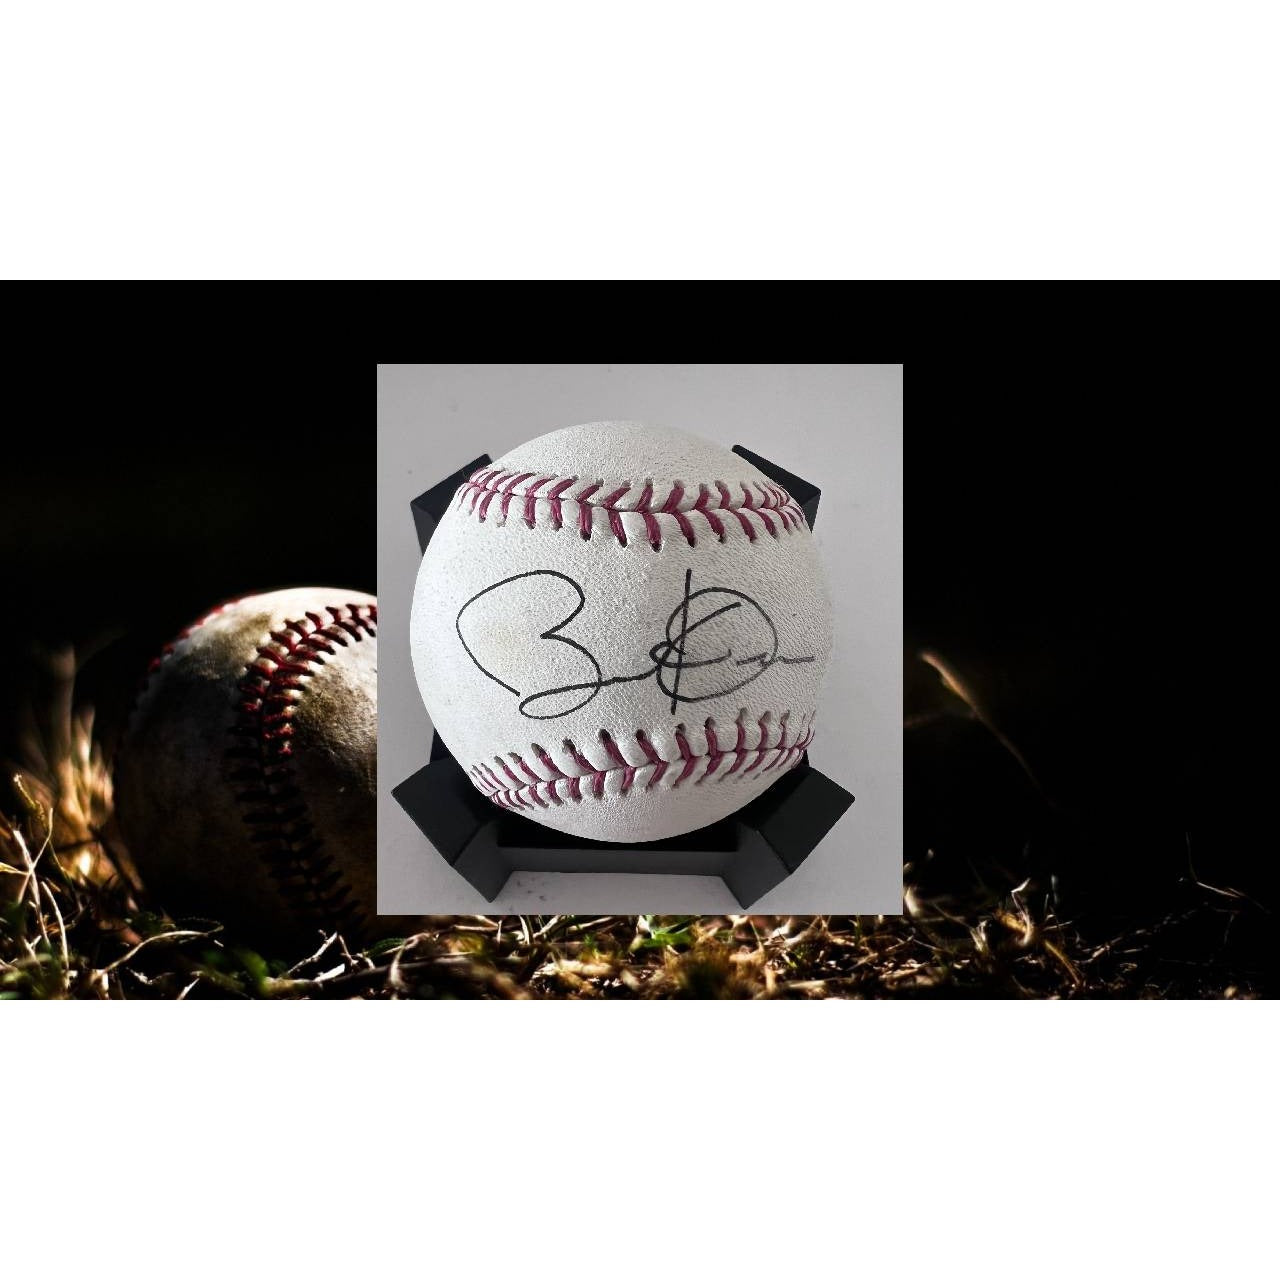 President Barack Obama Rawlings official MLB baseball signed with proof